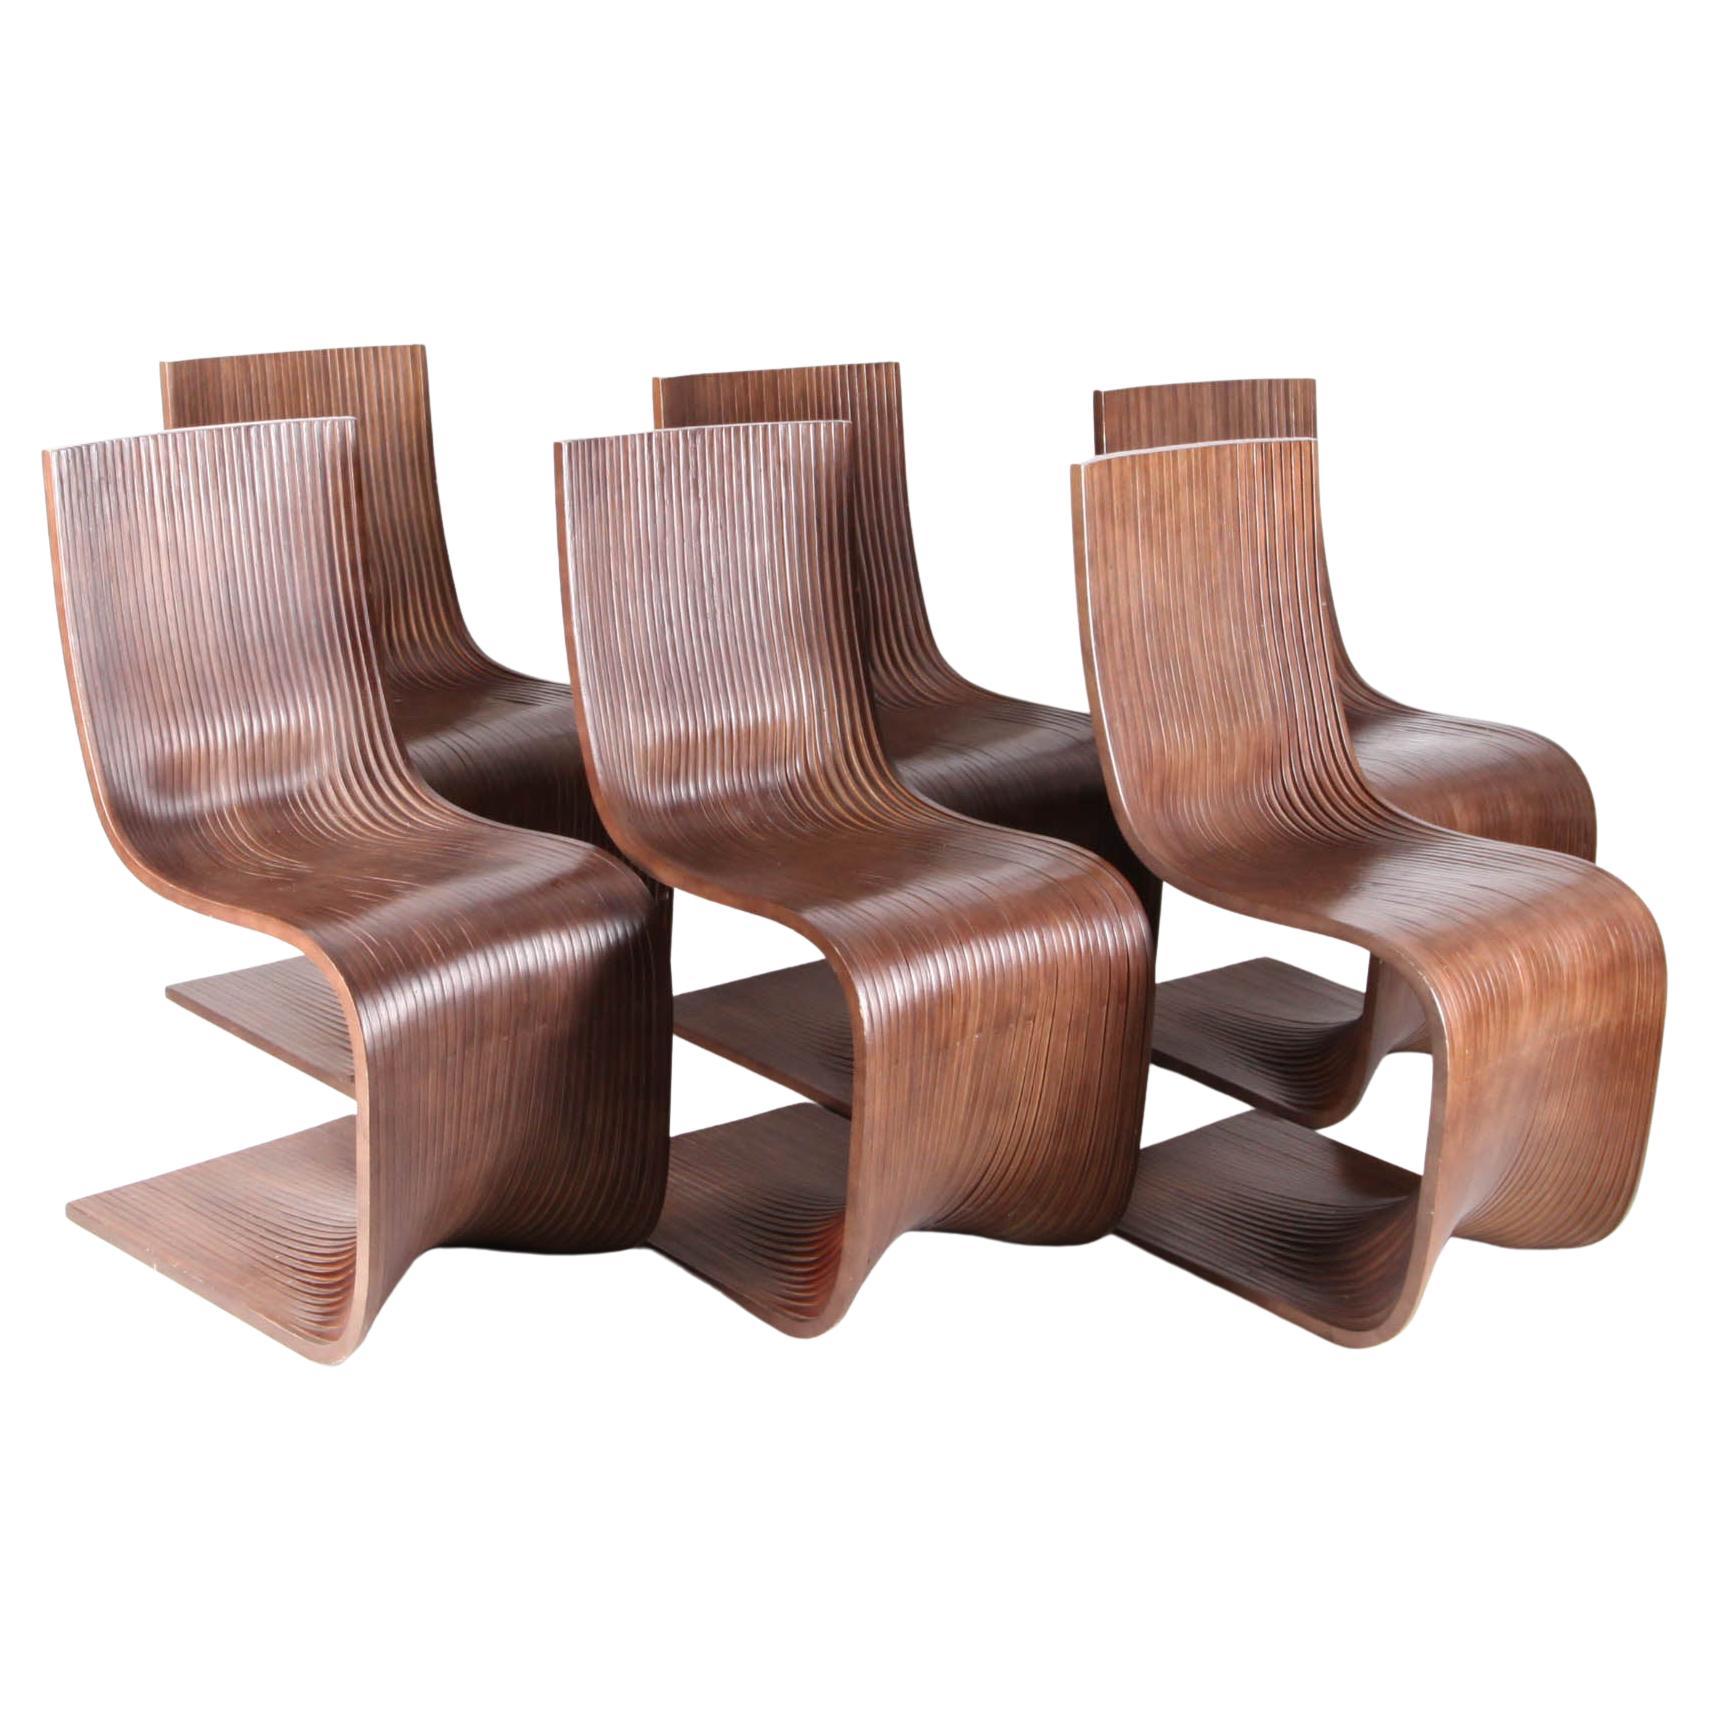 Set of 6 Vintage "S" Chairs by Alejandro Estrada